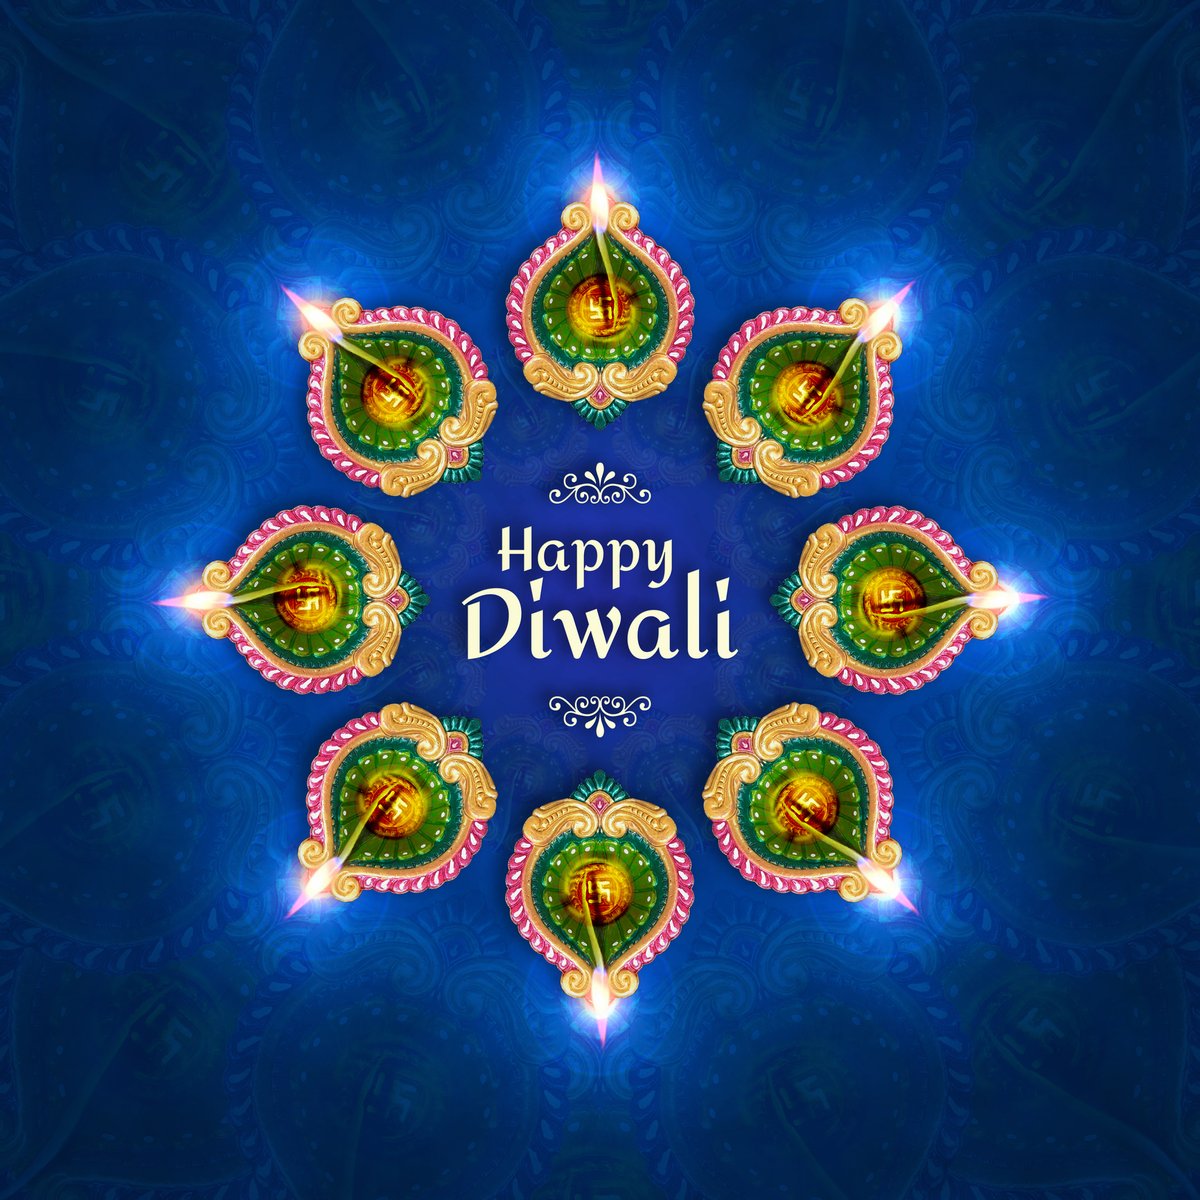 May all of your wishes come true this Diwali. ✨✨✨

#diwali2023 #diwali @EMC_Chris @EMC_DavidP @EMC_Policy @EMChamberNews